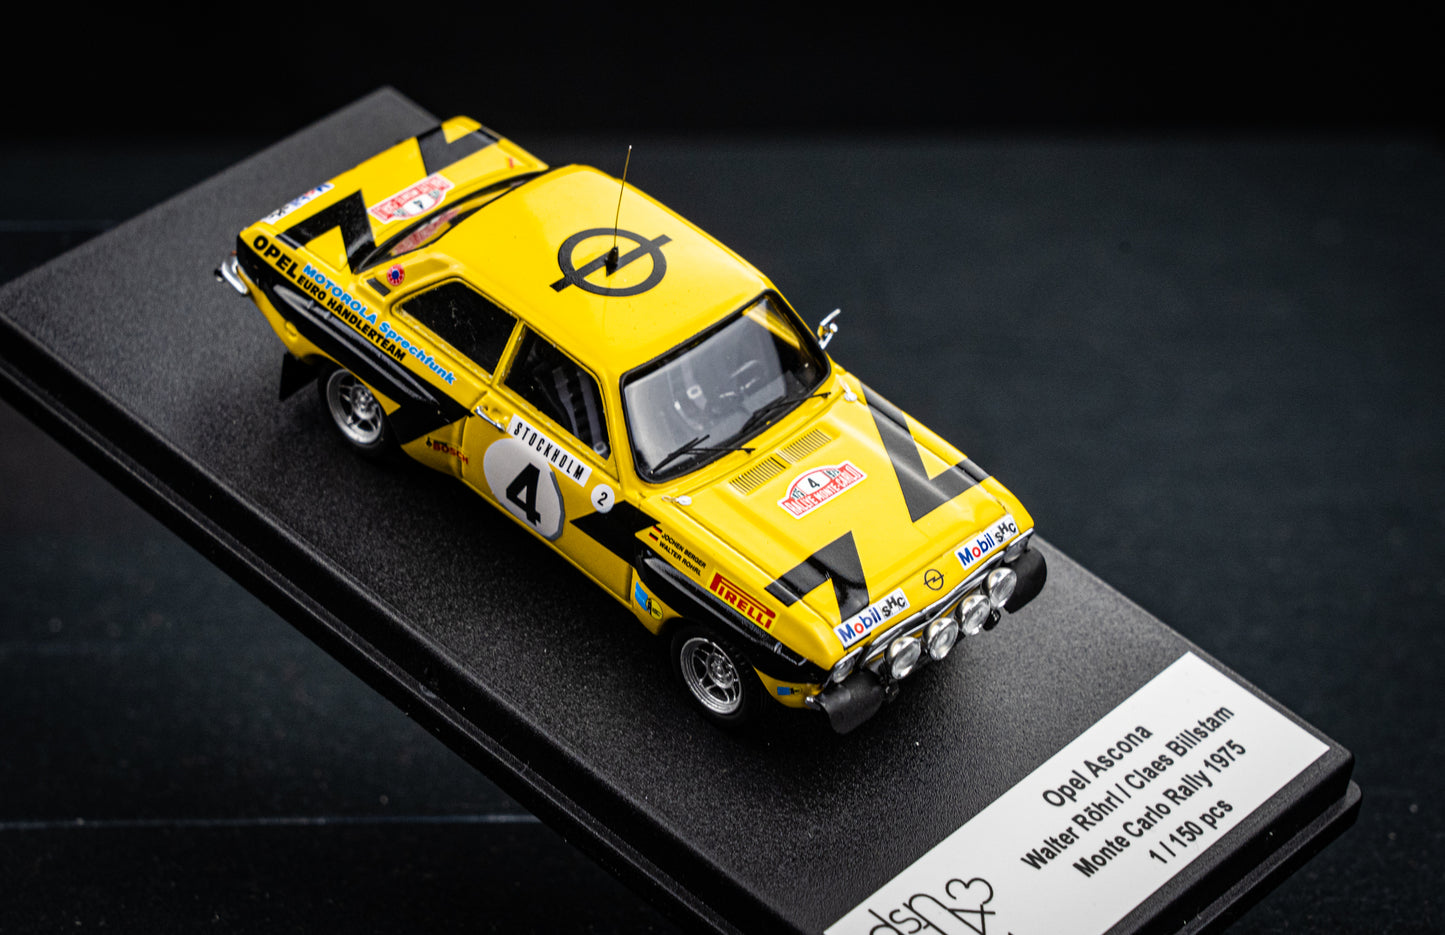 Opel Ascona #4 lim. 1/150 Stk. W. Röhrl /J. Berger - Rallye Monte Carlo 75 DSN